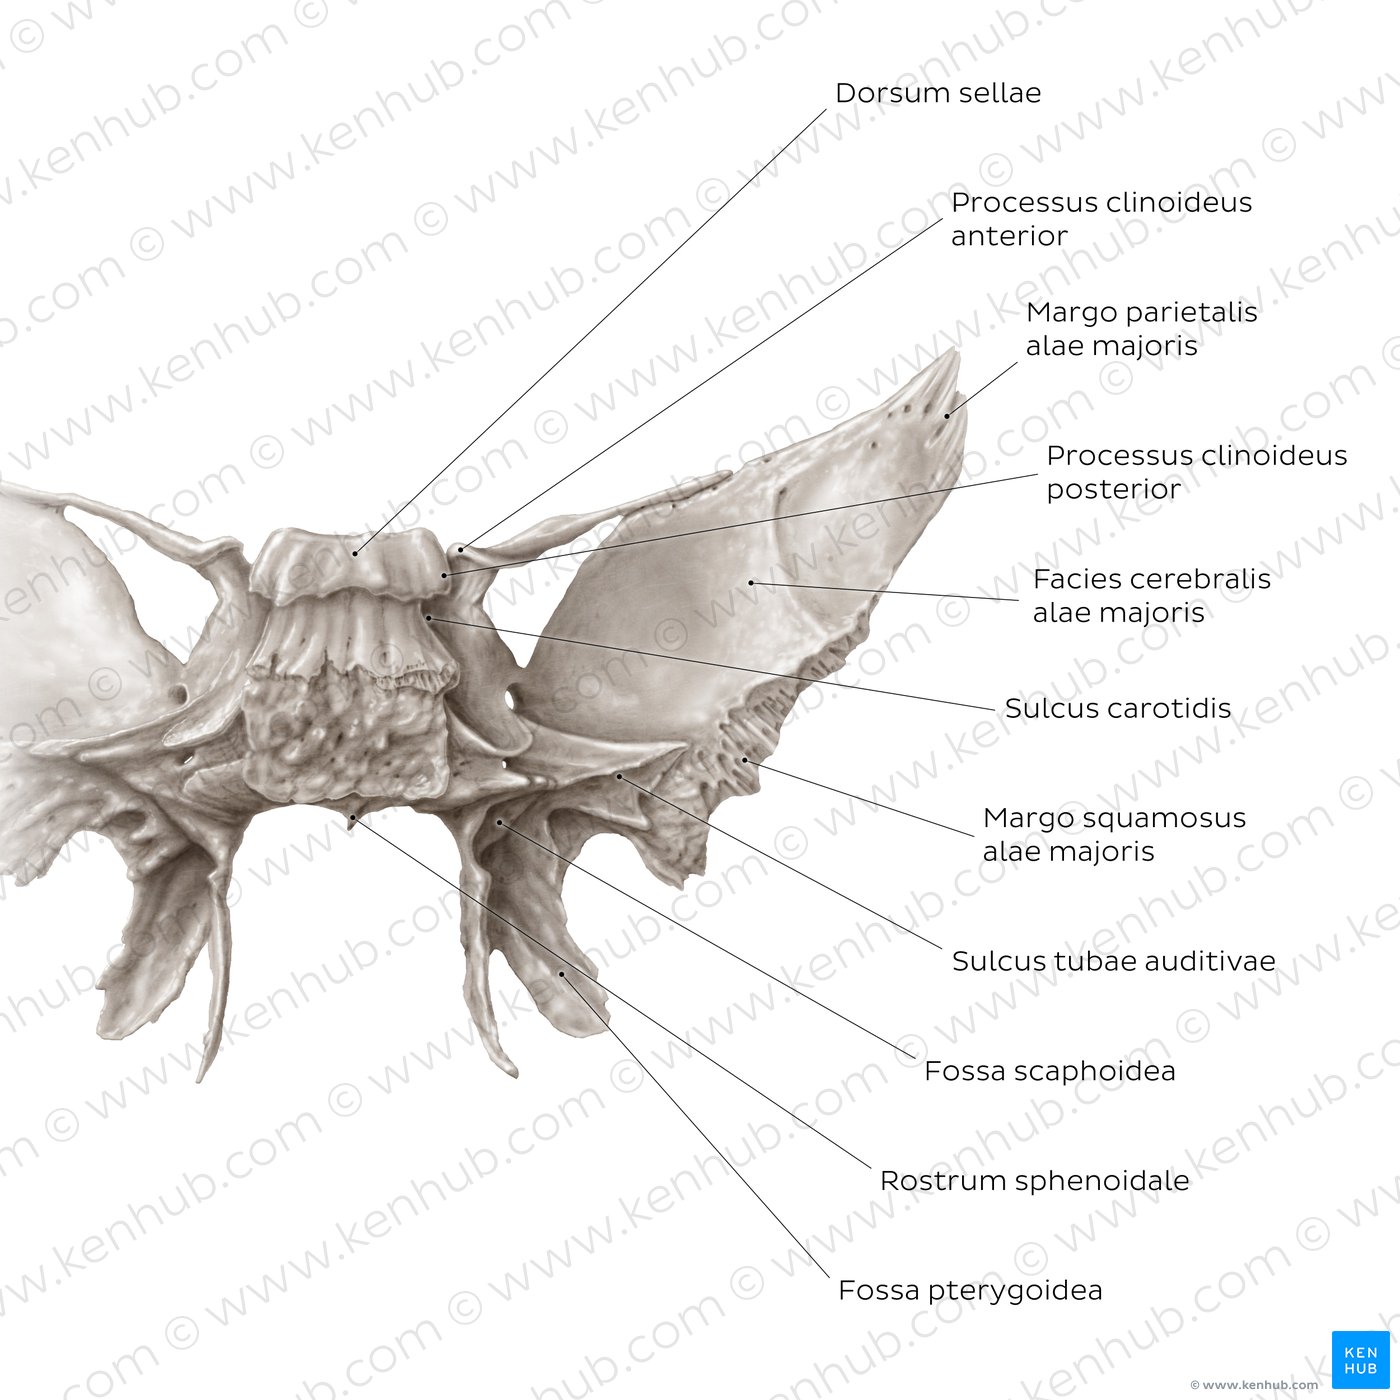 Os sphenoidale (posterior view)